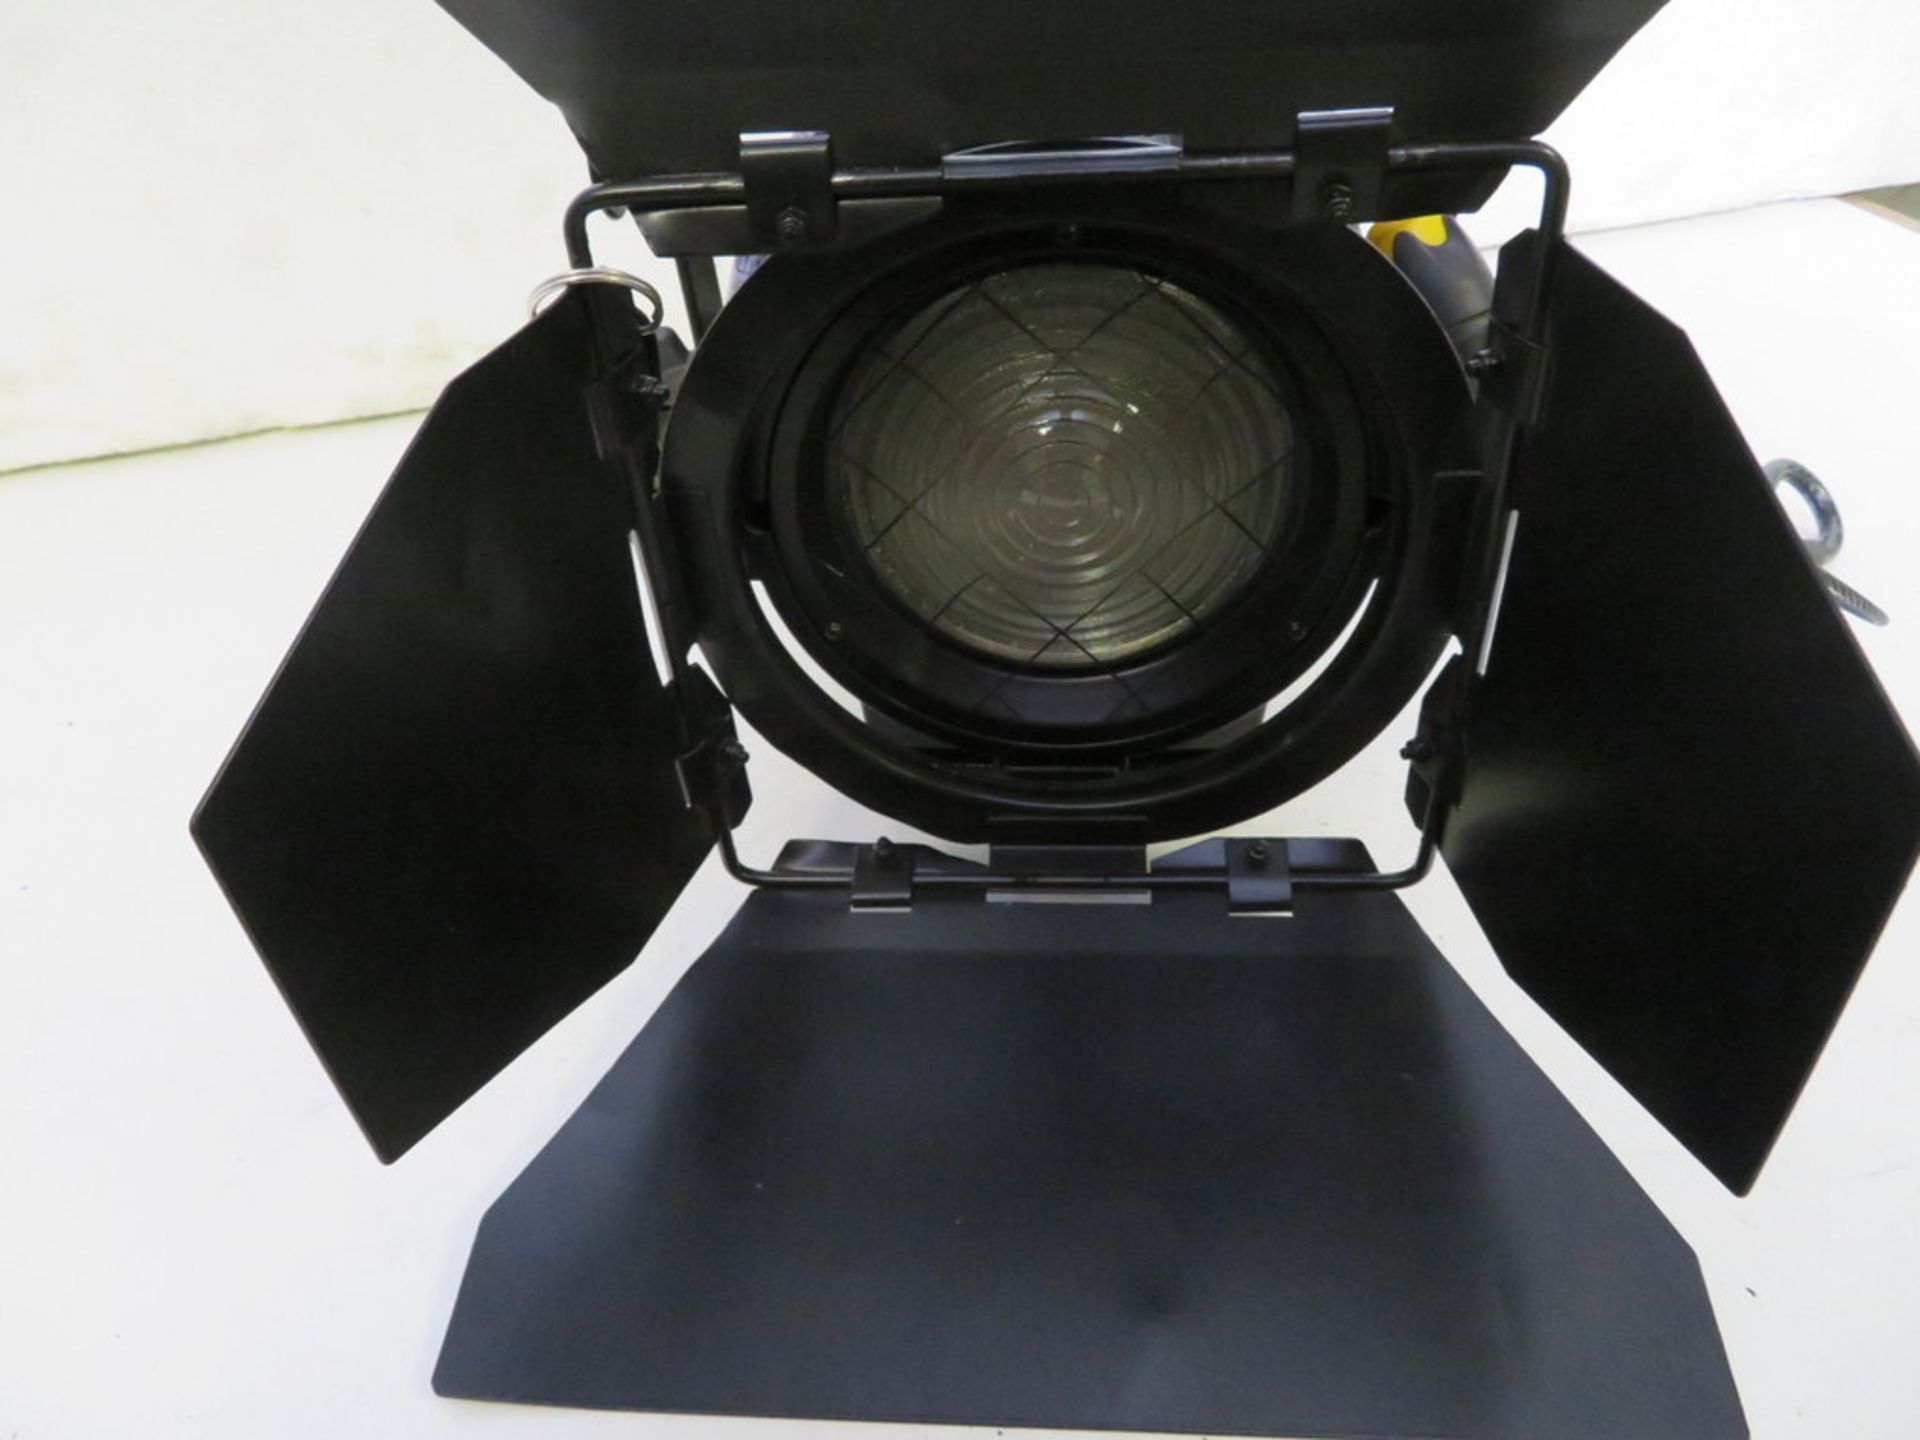 1 x Arri 650w fresnel black c/w barndoor, lamp & safety bond - Truecon connector - Image 2 of 2